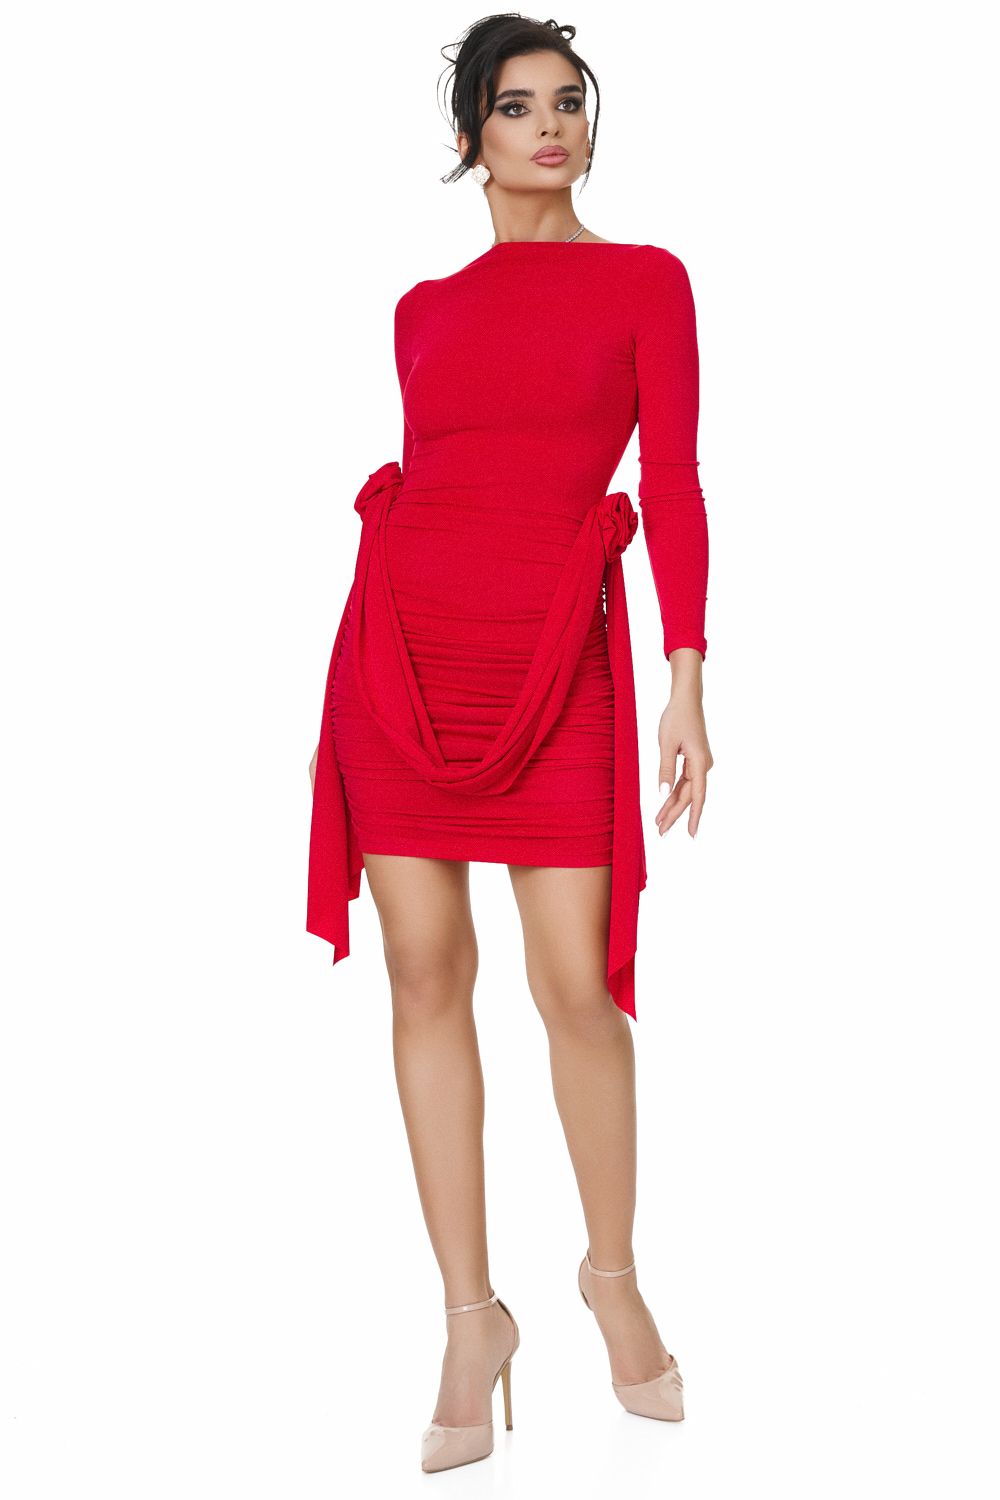 Short red lady dress Vesia Bogas